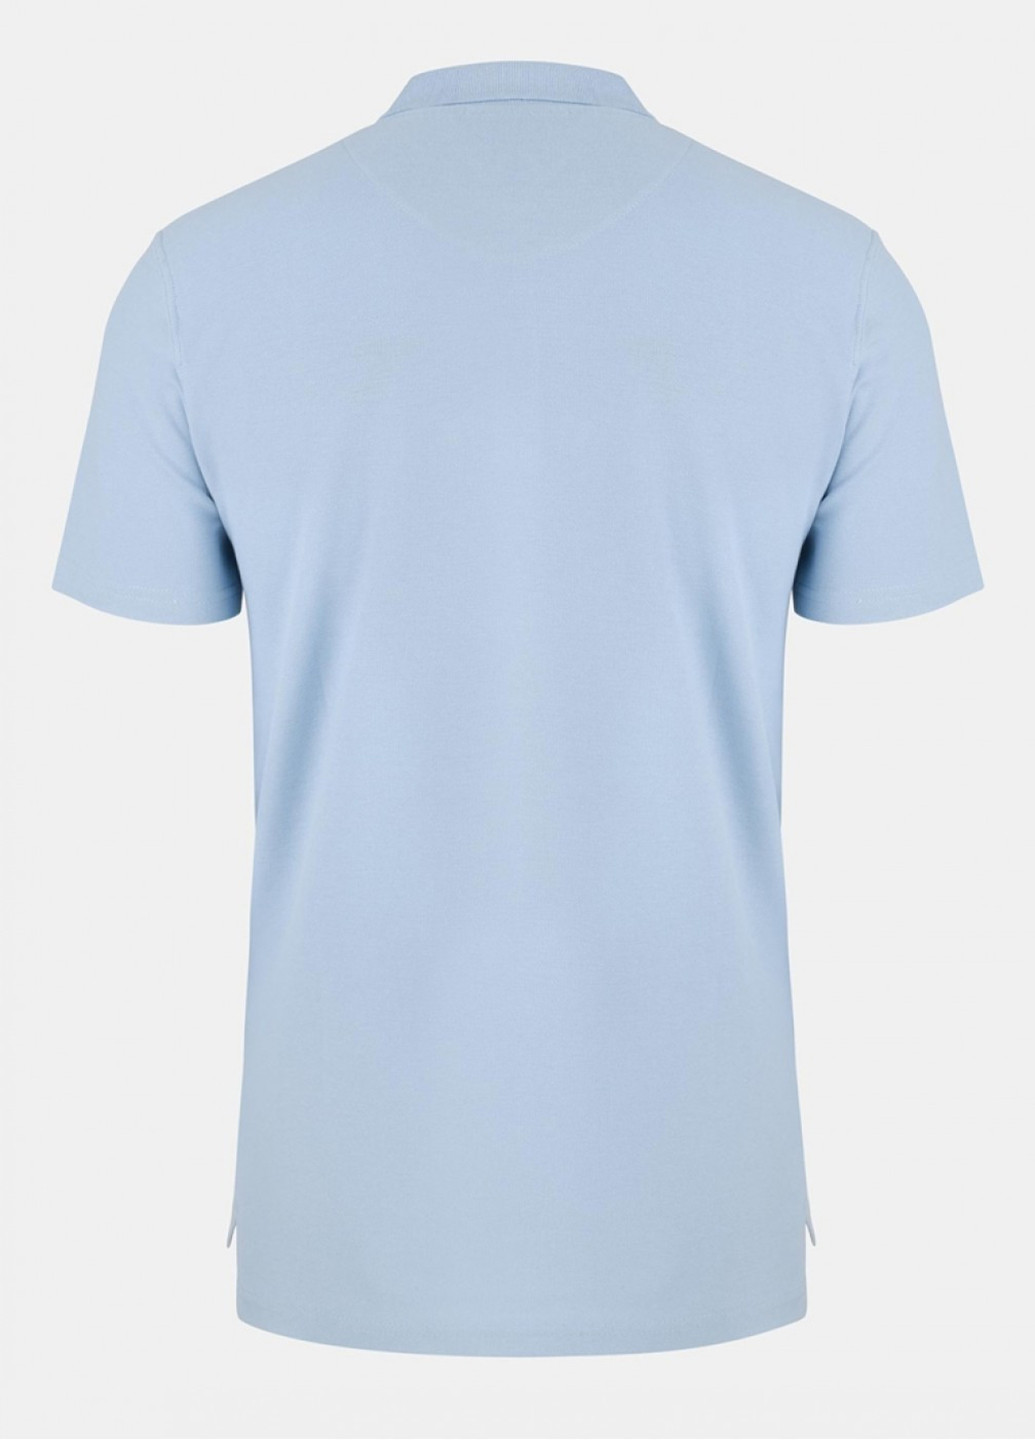 Голубой футболка-поло для мужчин Pako Lorente однотонная